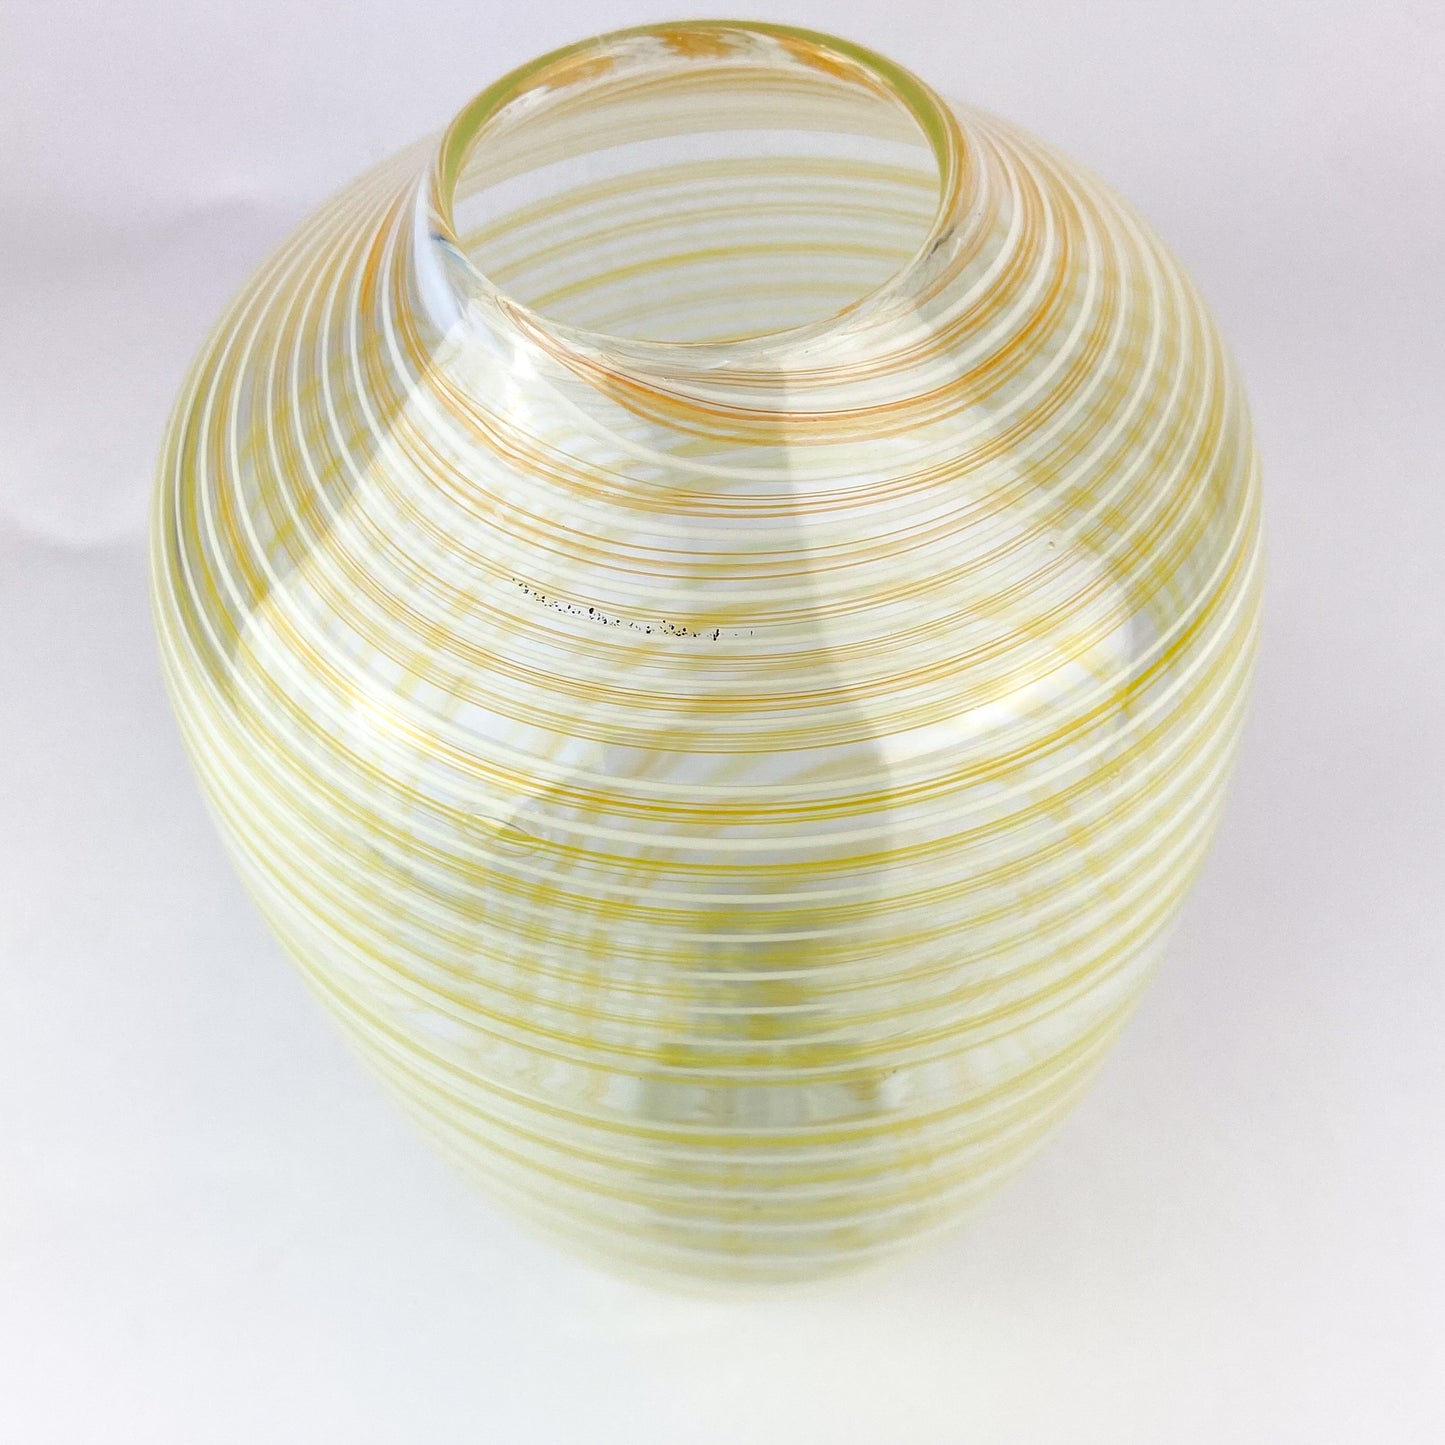 Handblown Yellow + White Striped Studio Art Glass Vase #O705